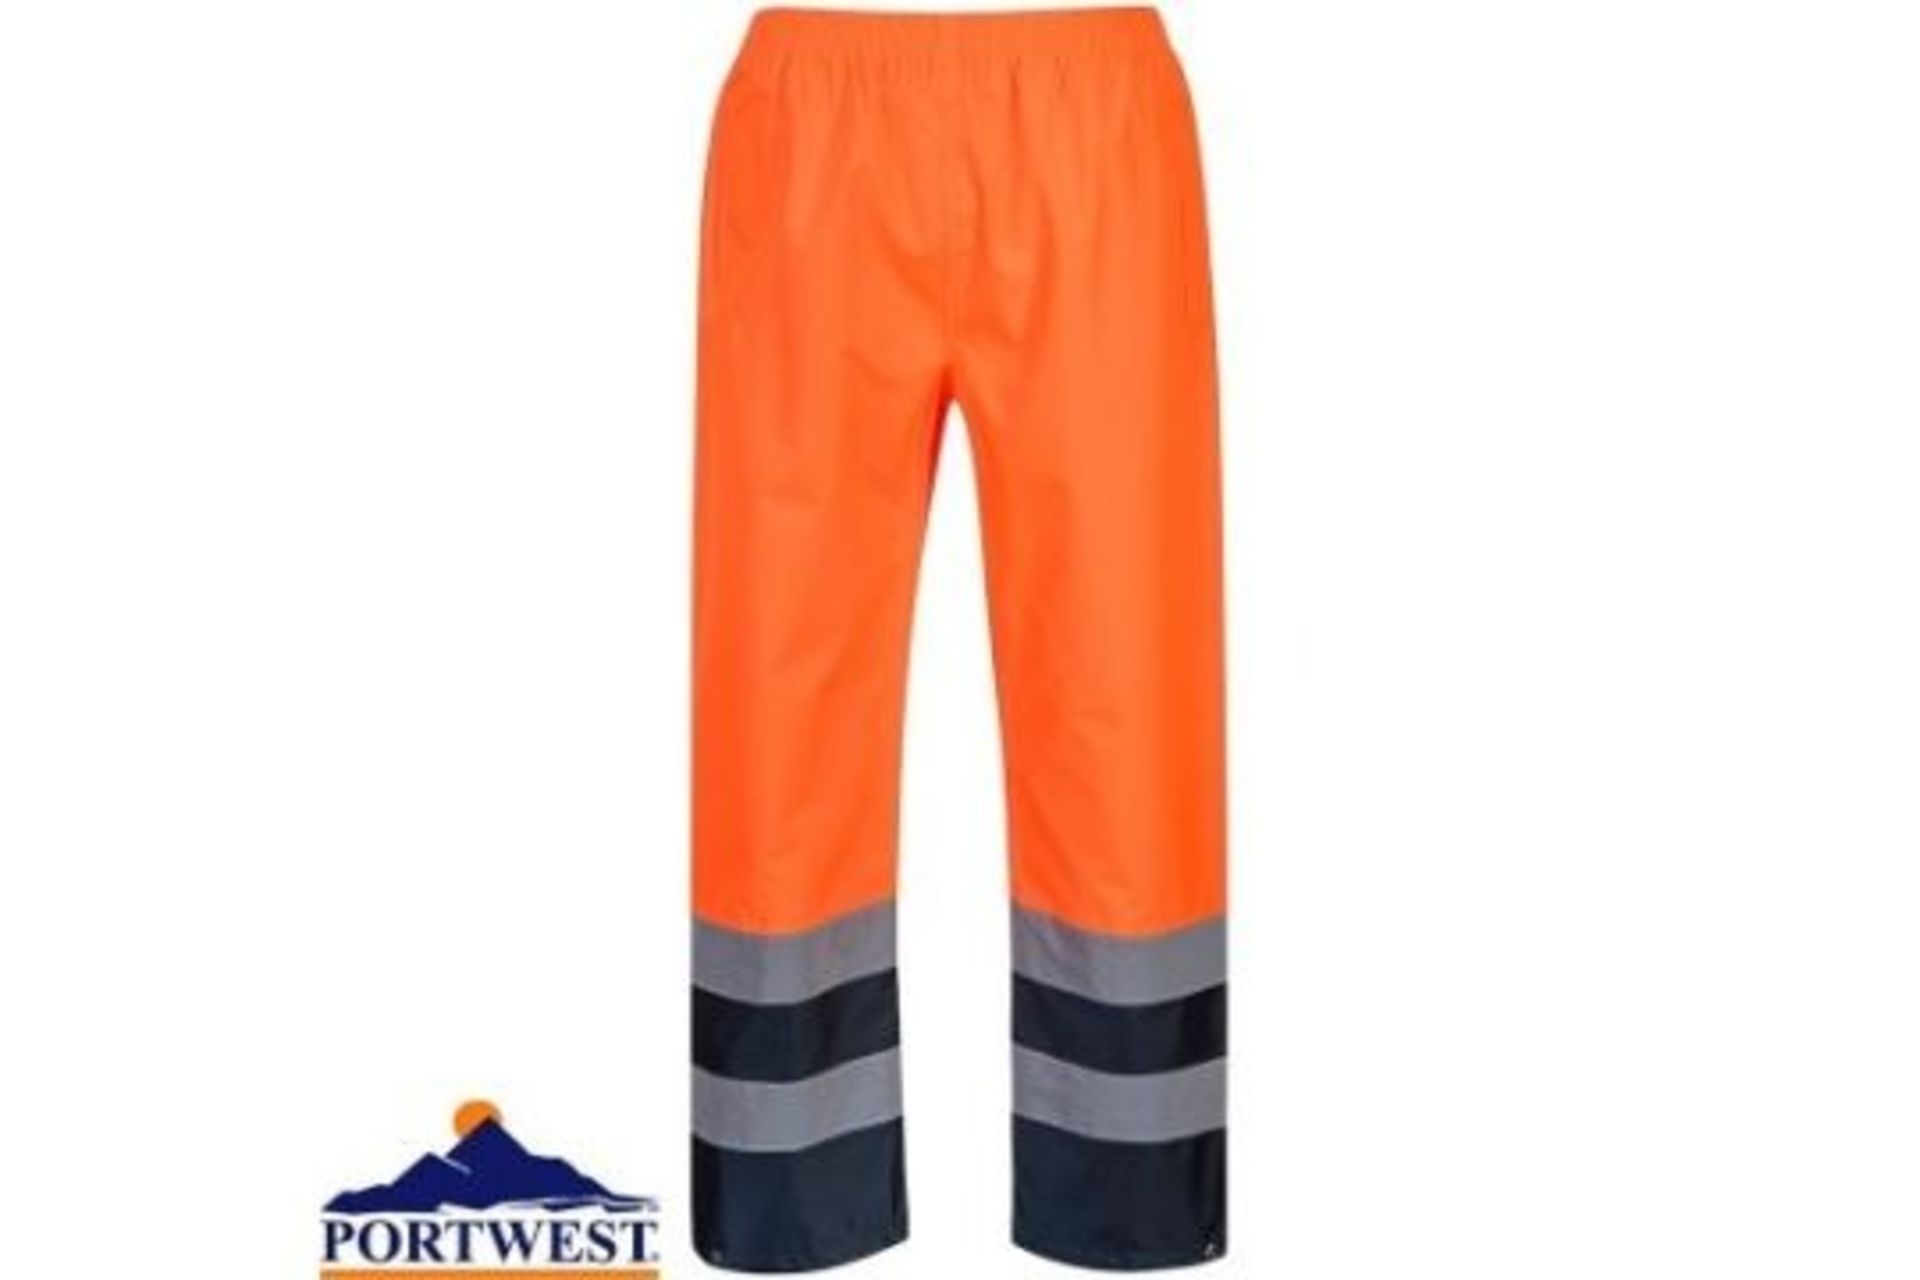 24x Brand New Portwest S486 Orange Hi Vis Two Tone Traffic Trousers - XL RRP £15.81 Each (R23)